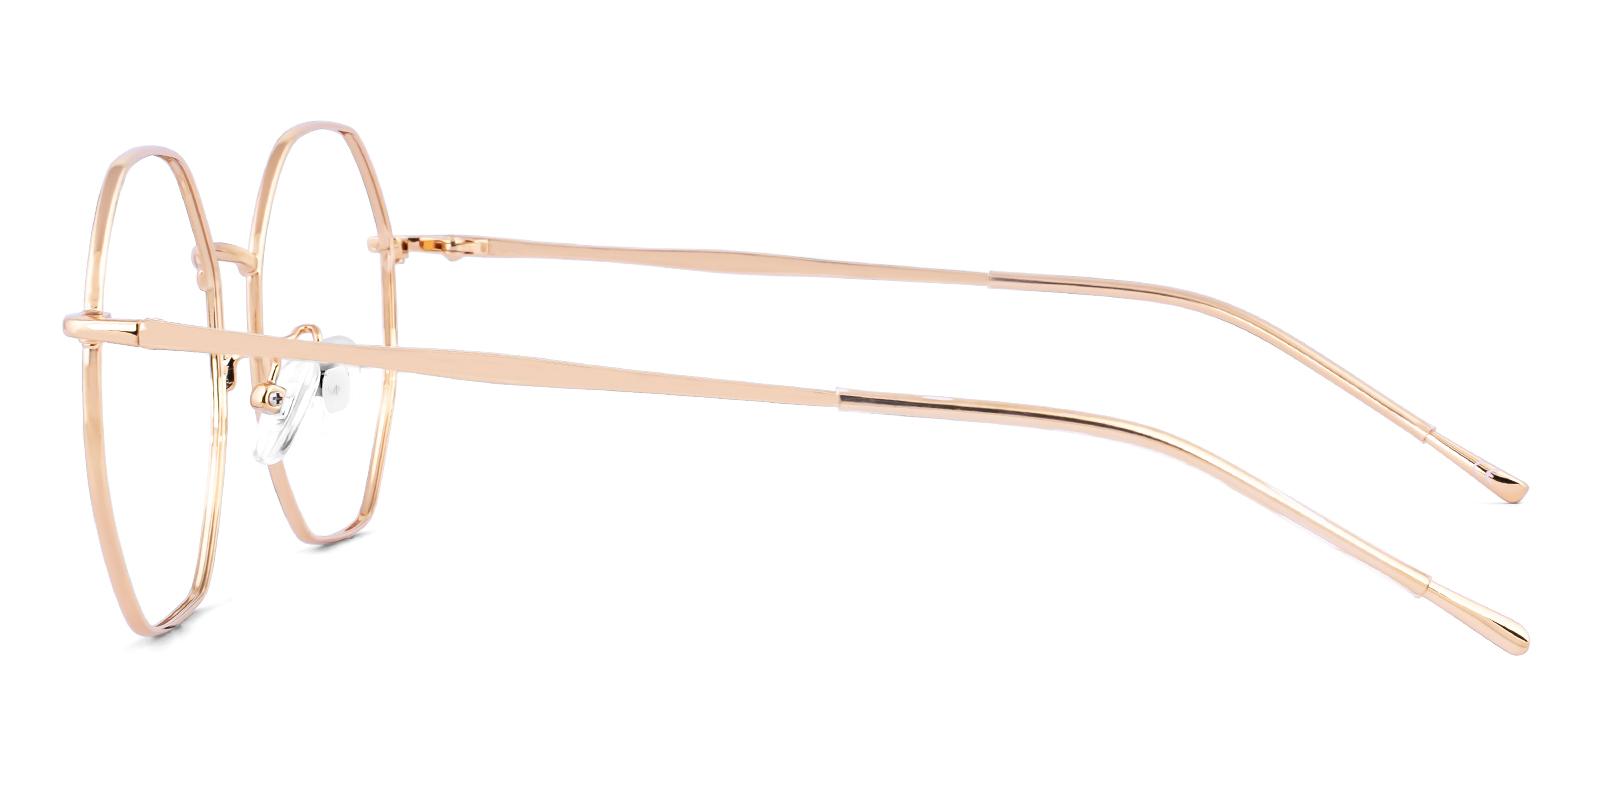 Salieur Rosegold Metal Eyeglasses , NosePads Frames from ABBE Glasses